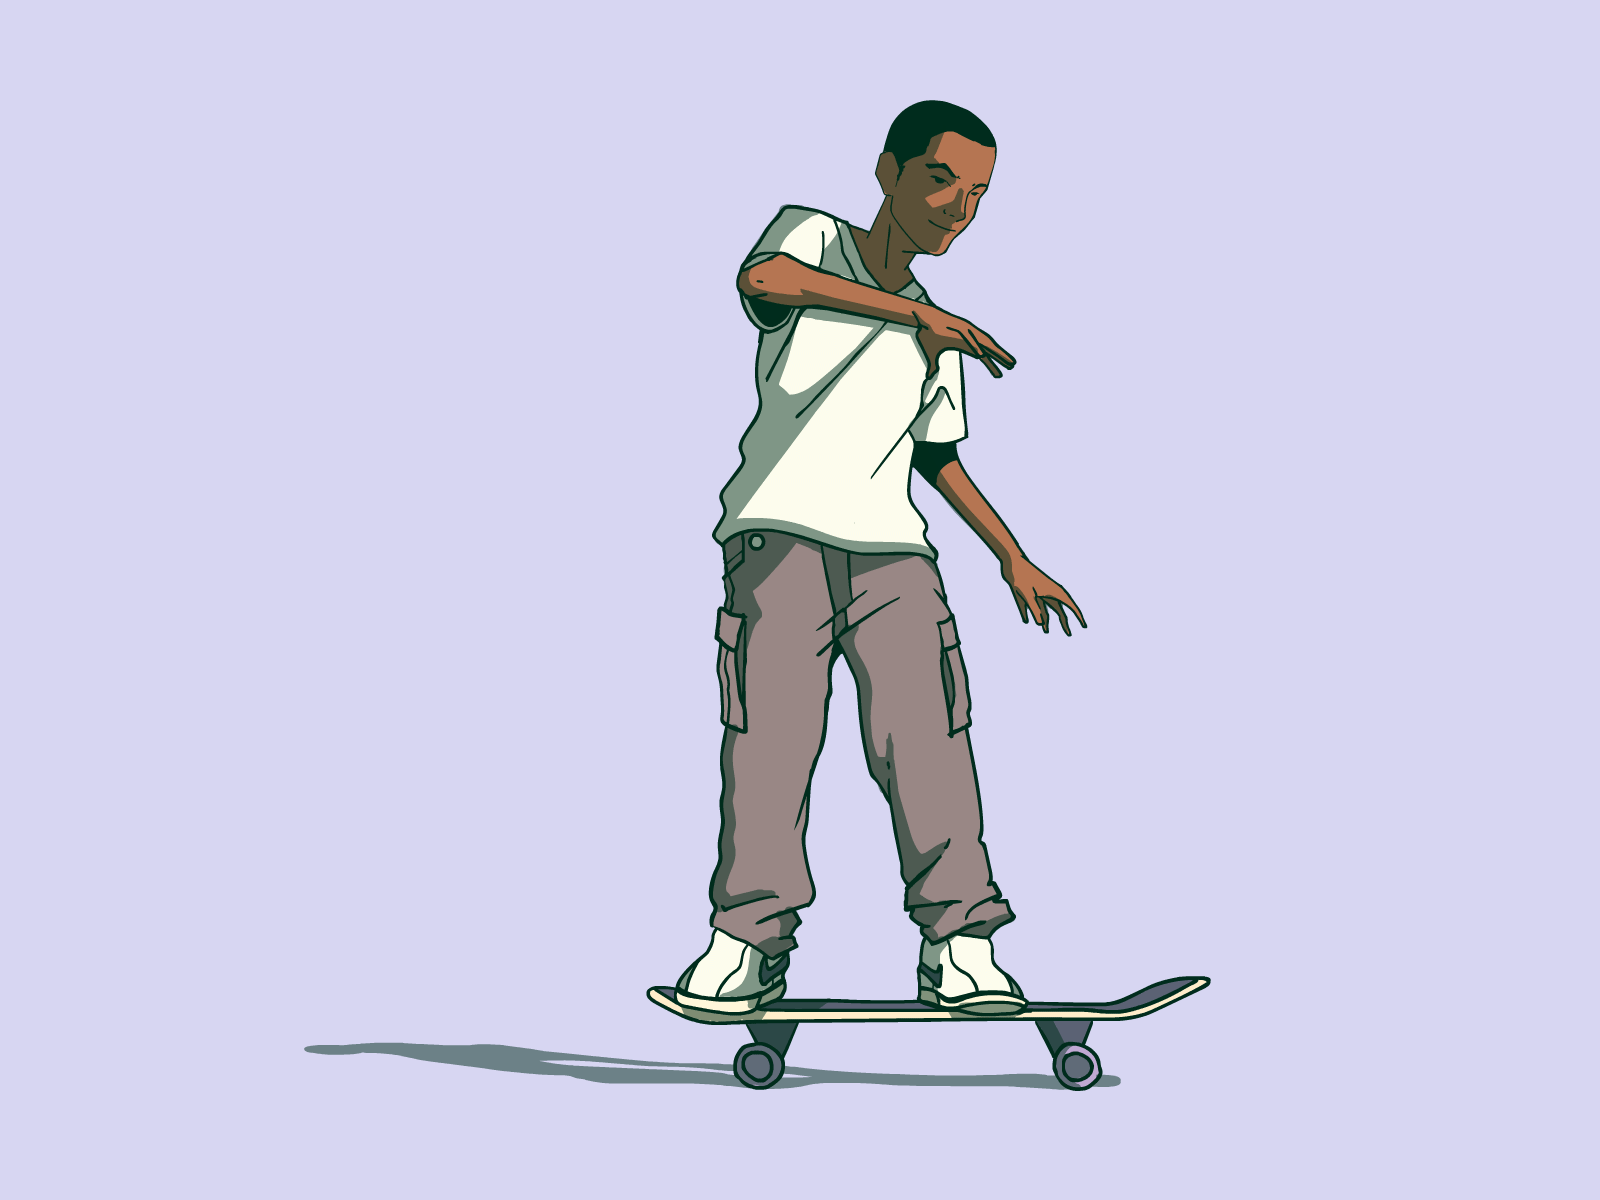 Skateboard Cartoon Image